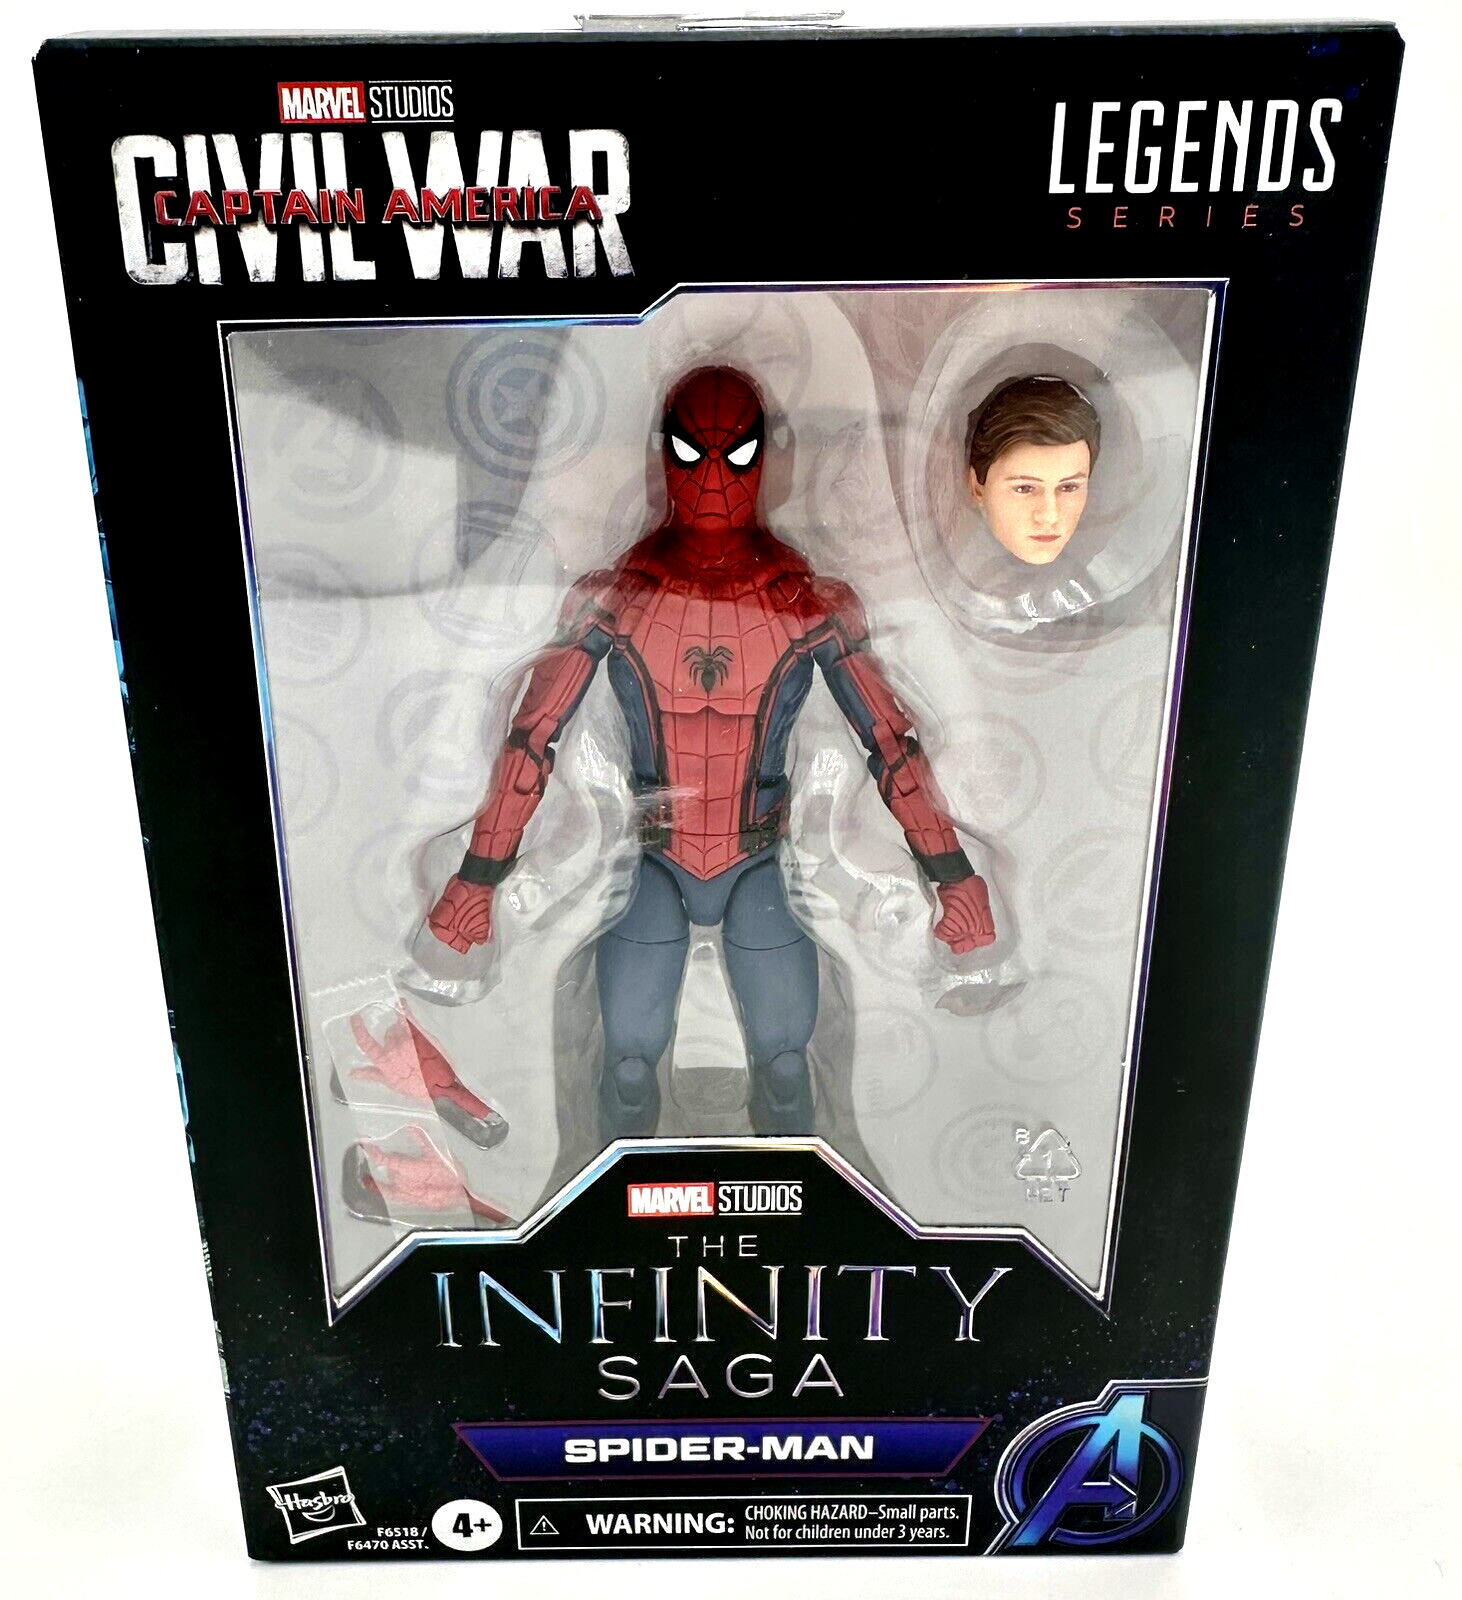 Marvel Legends Avengers Infinity Saga Spider-Man Action Figure - Civil War